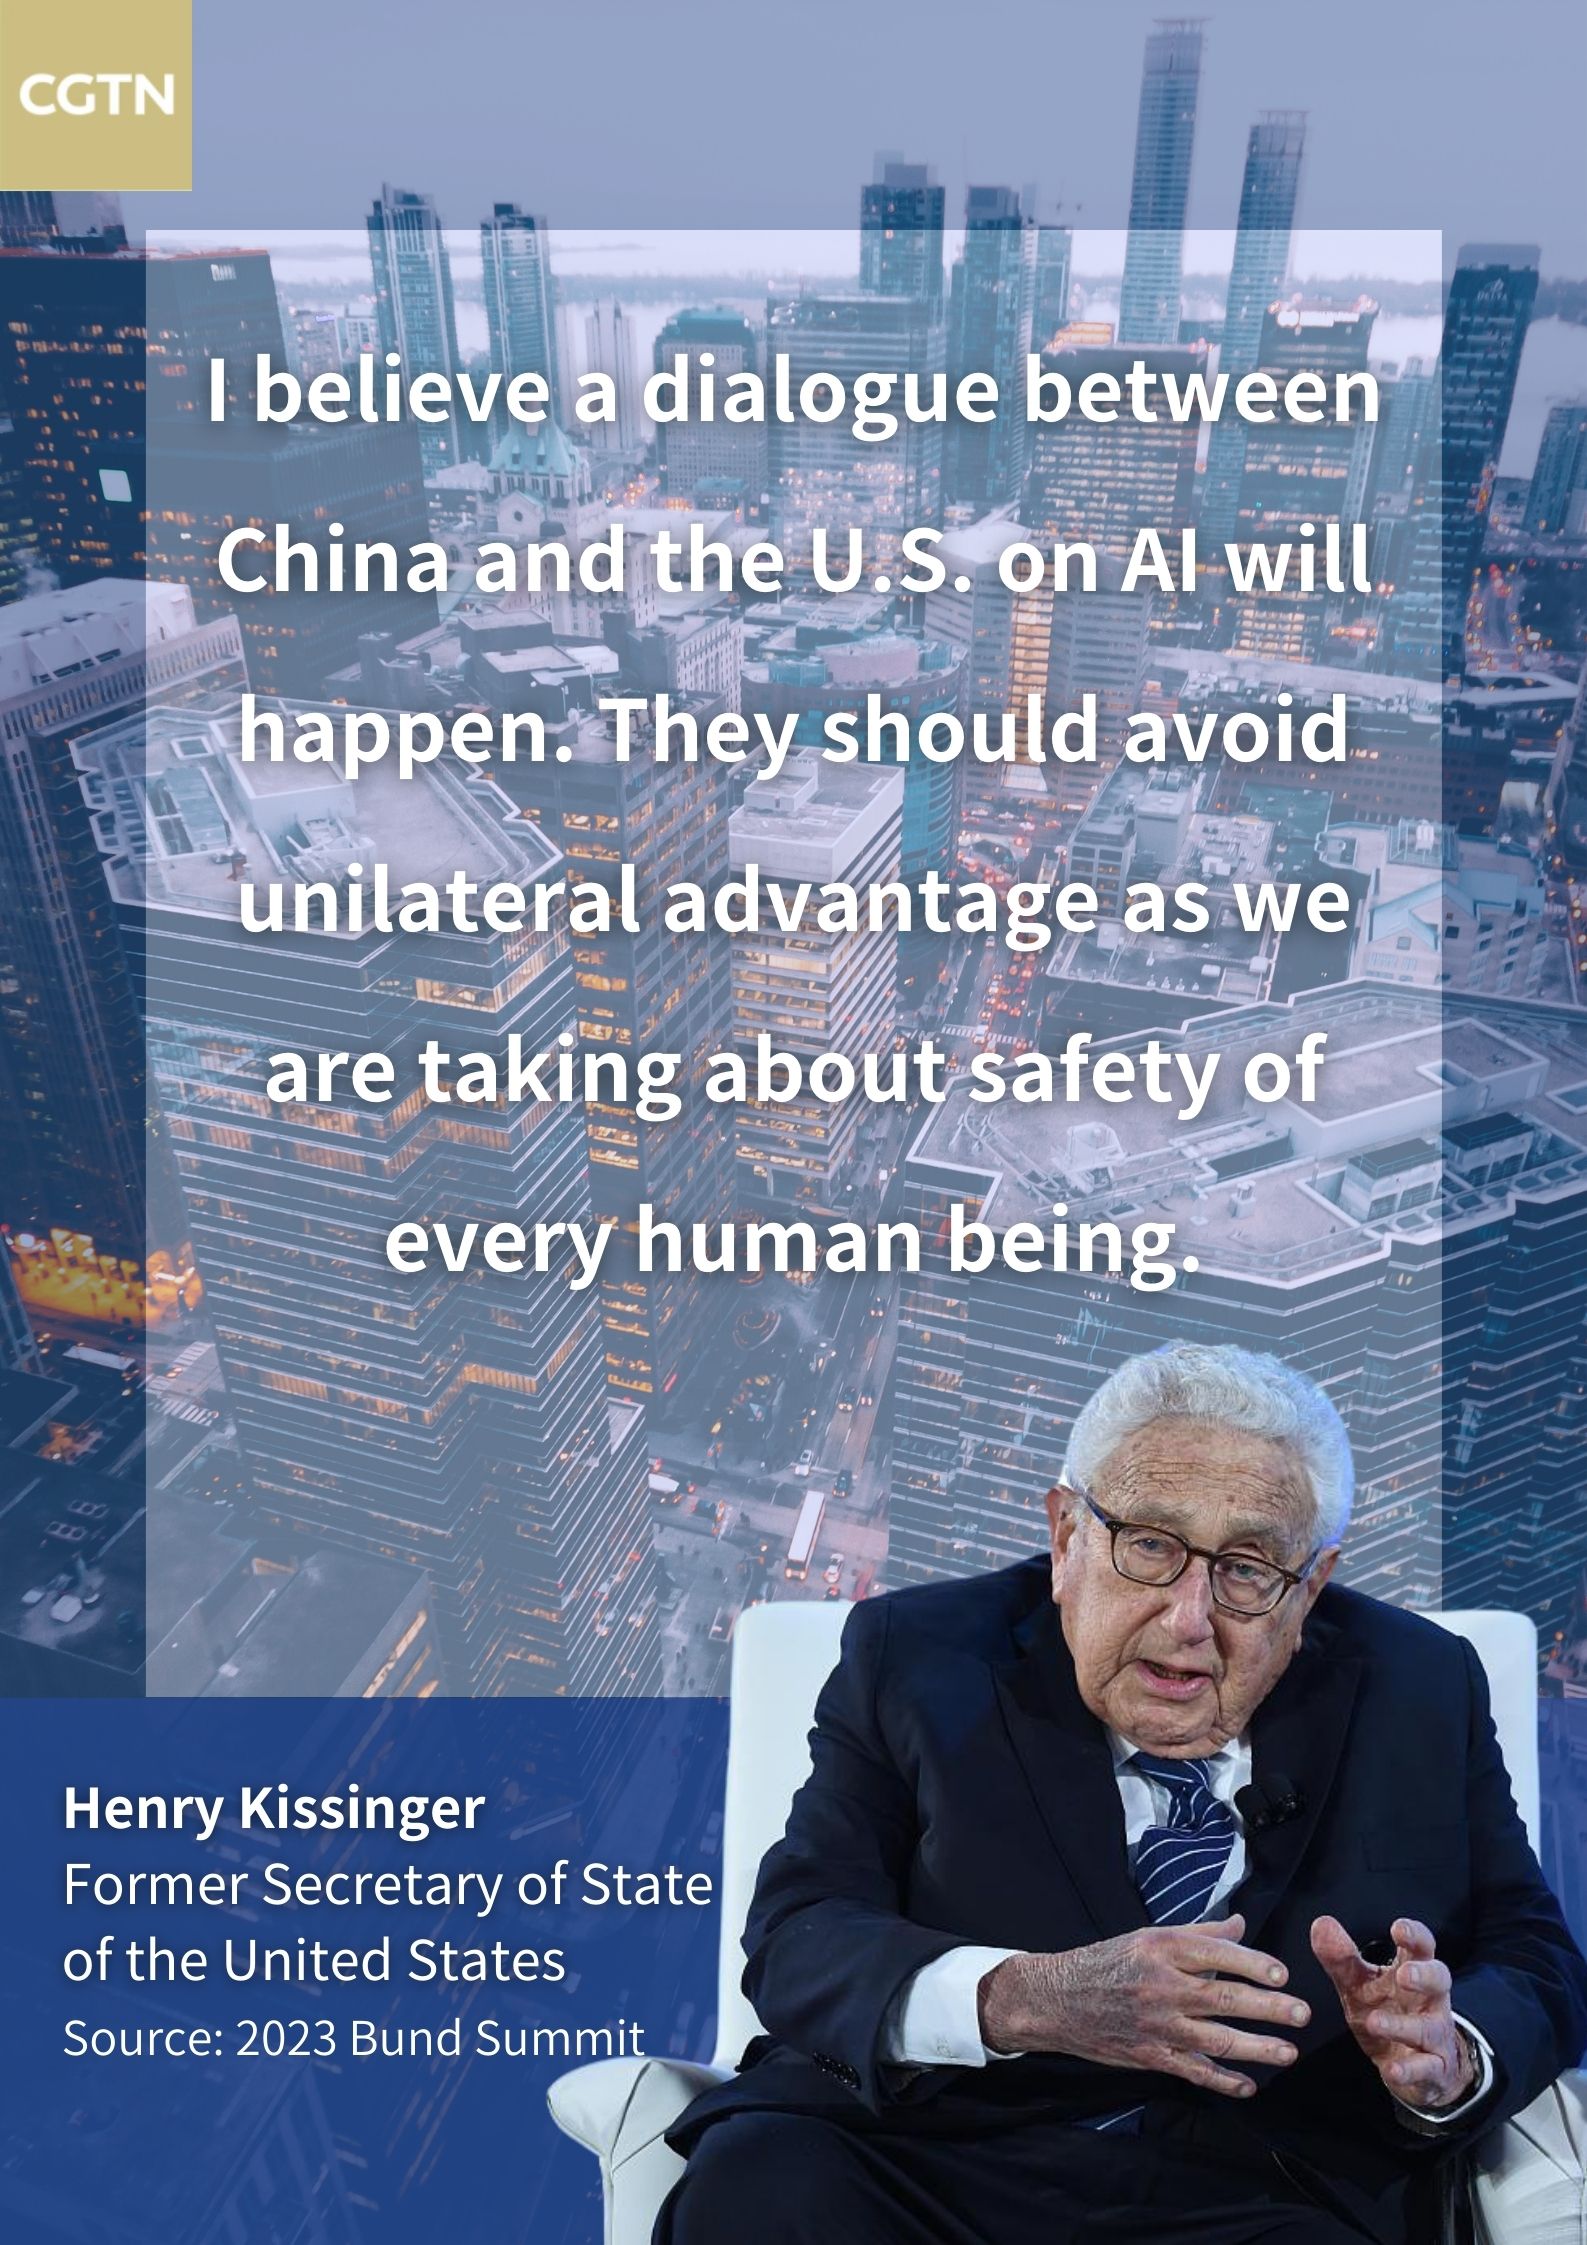 Kissinger: Decoupling 'great disadvantage' to both U.S. and China